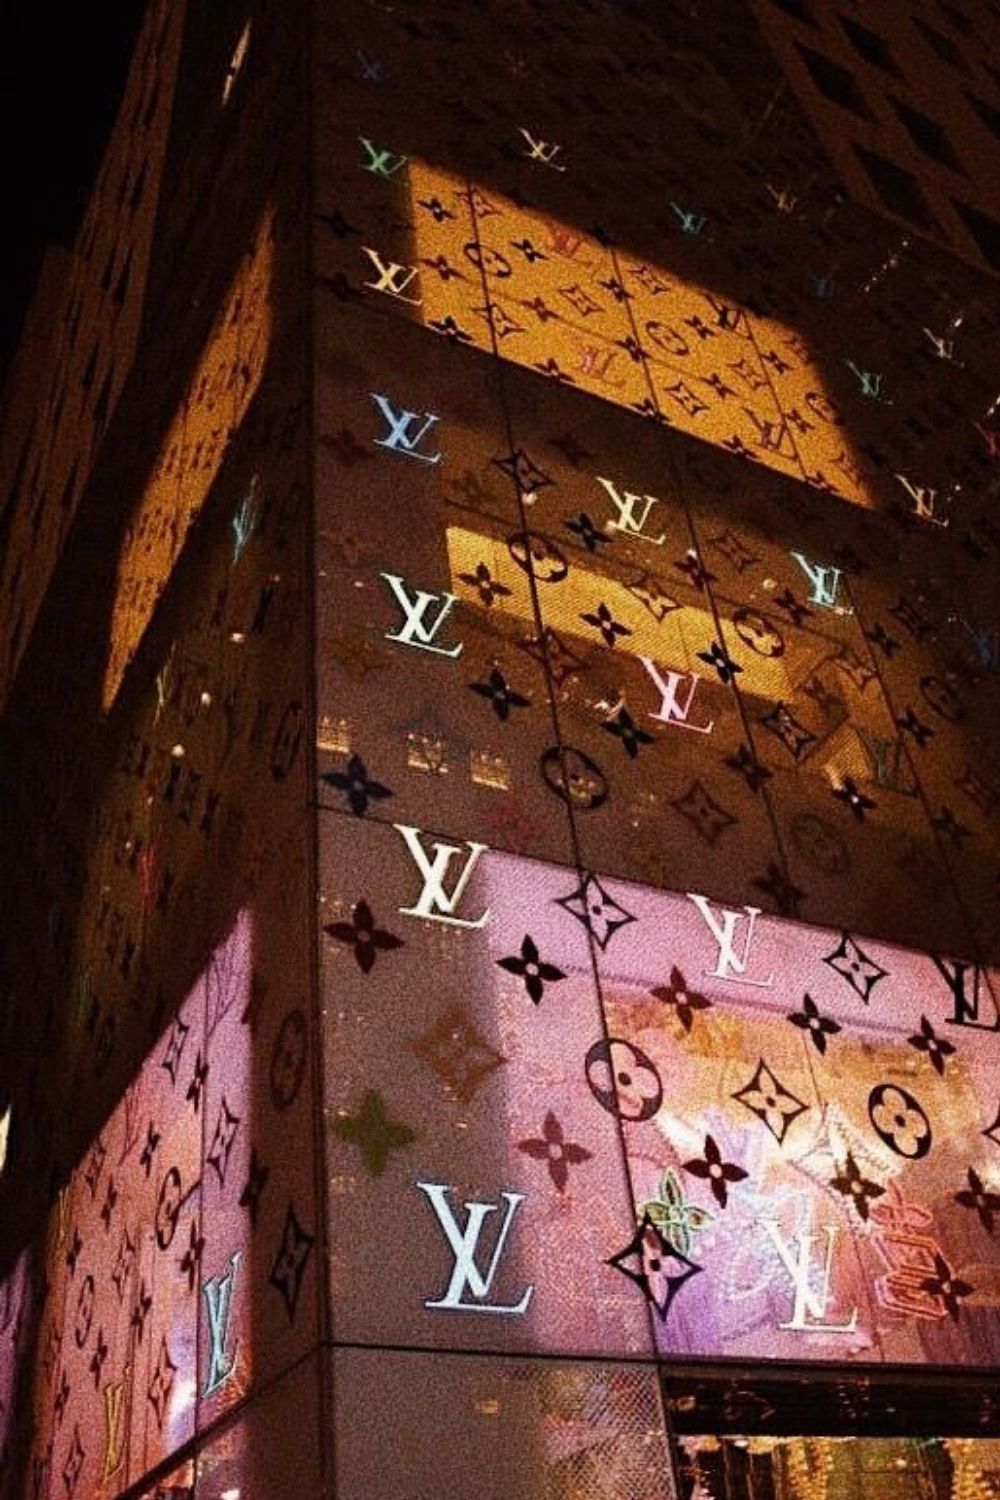 A building with louis vuitton logos on it - Louis Vuitton